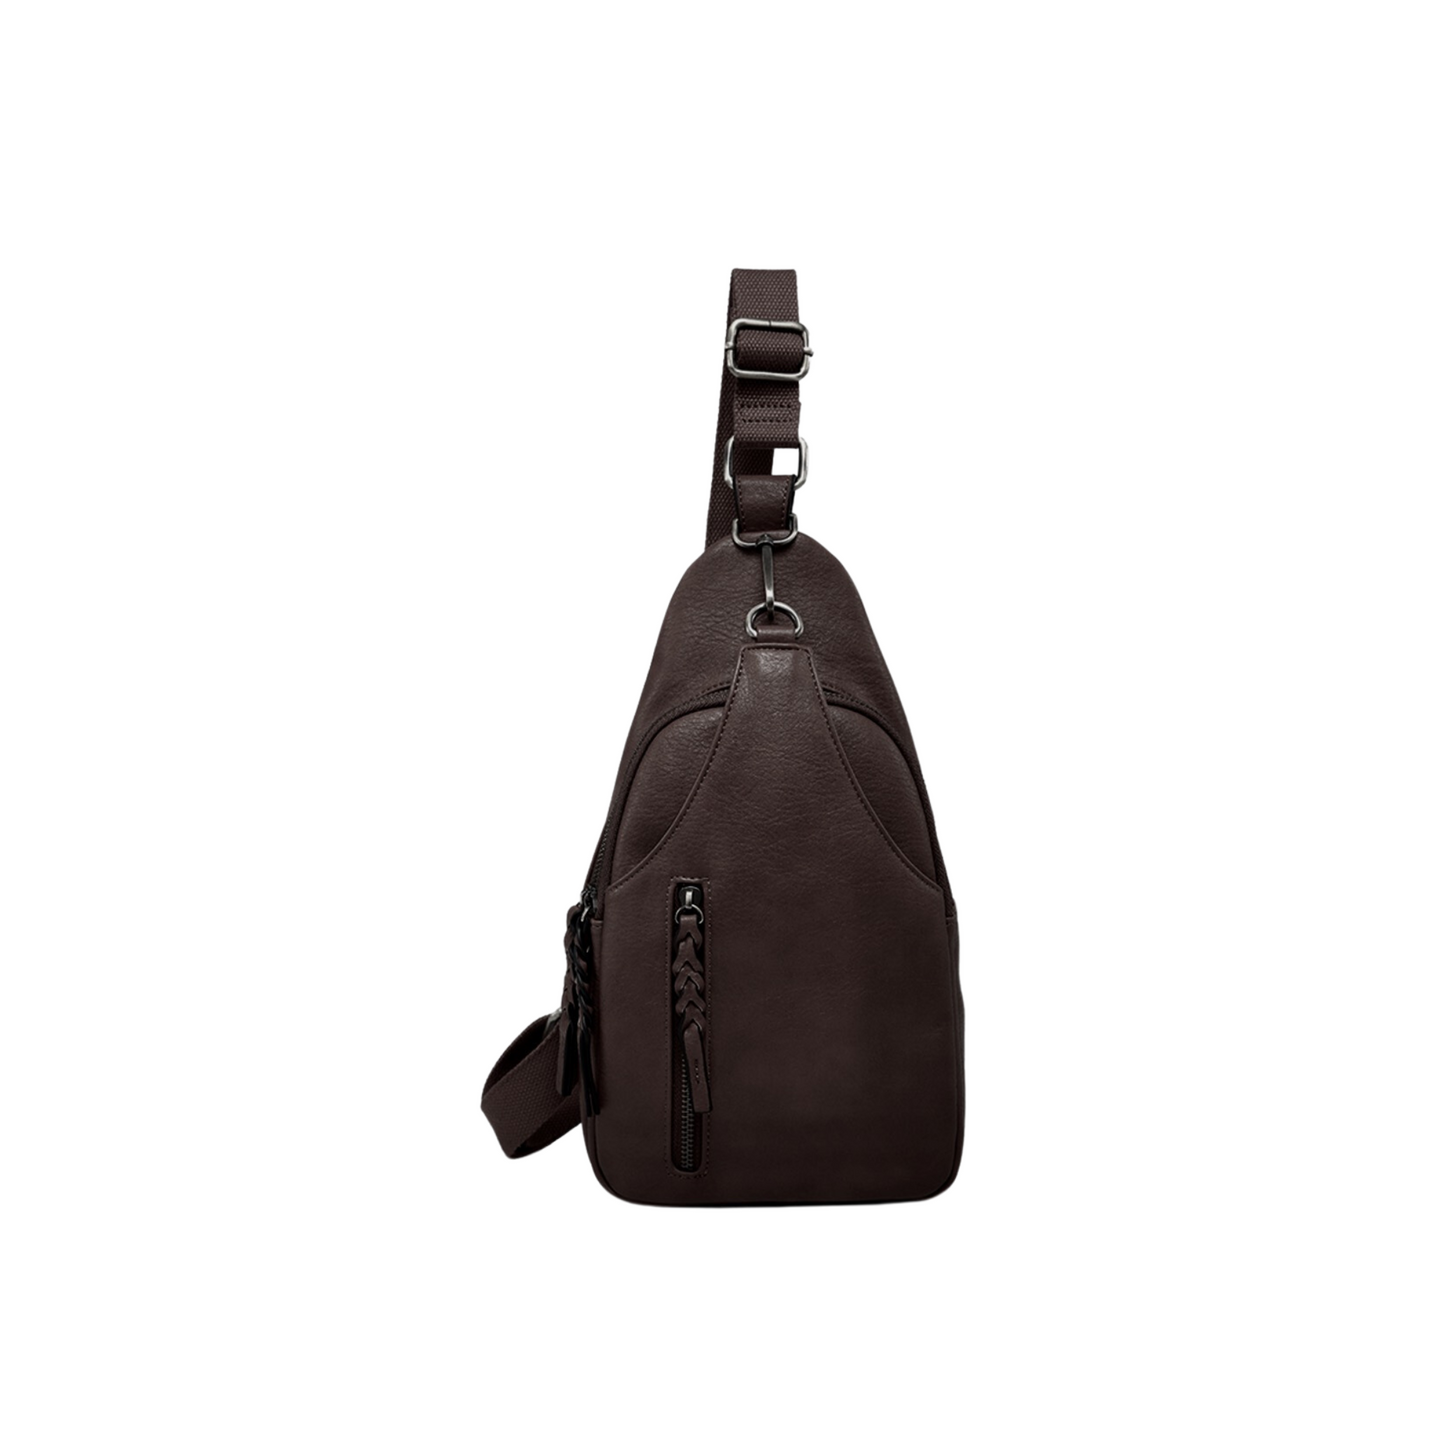 Chocolate colored crossbody sling bag